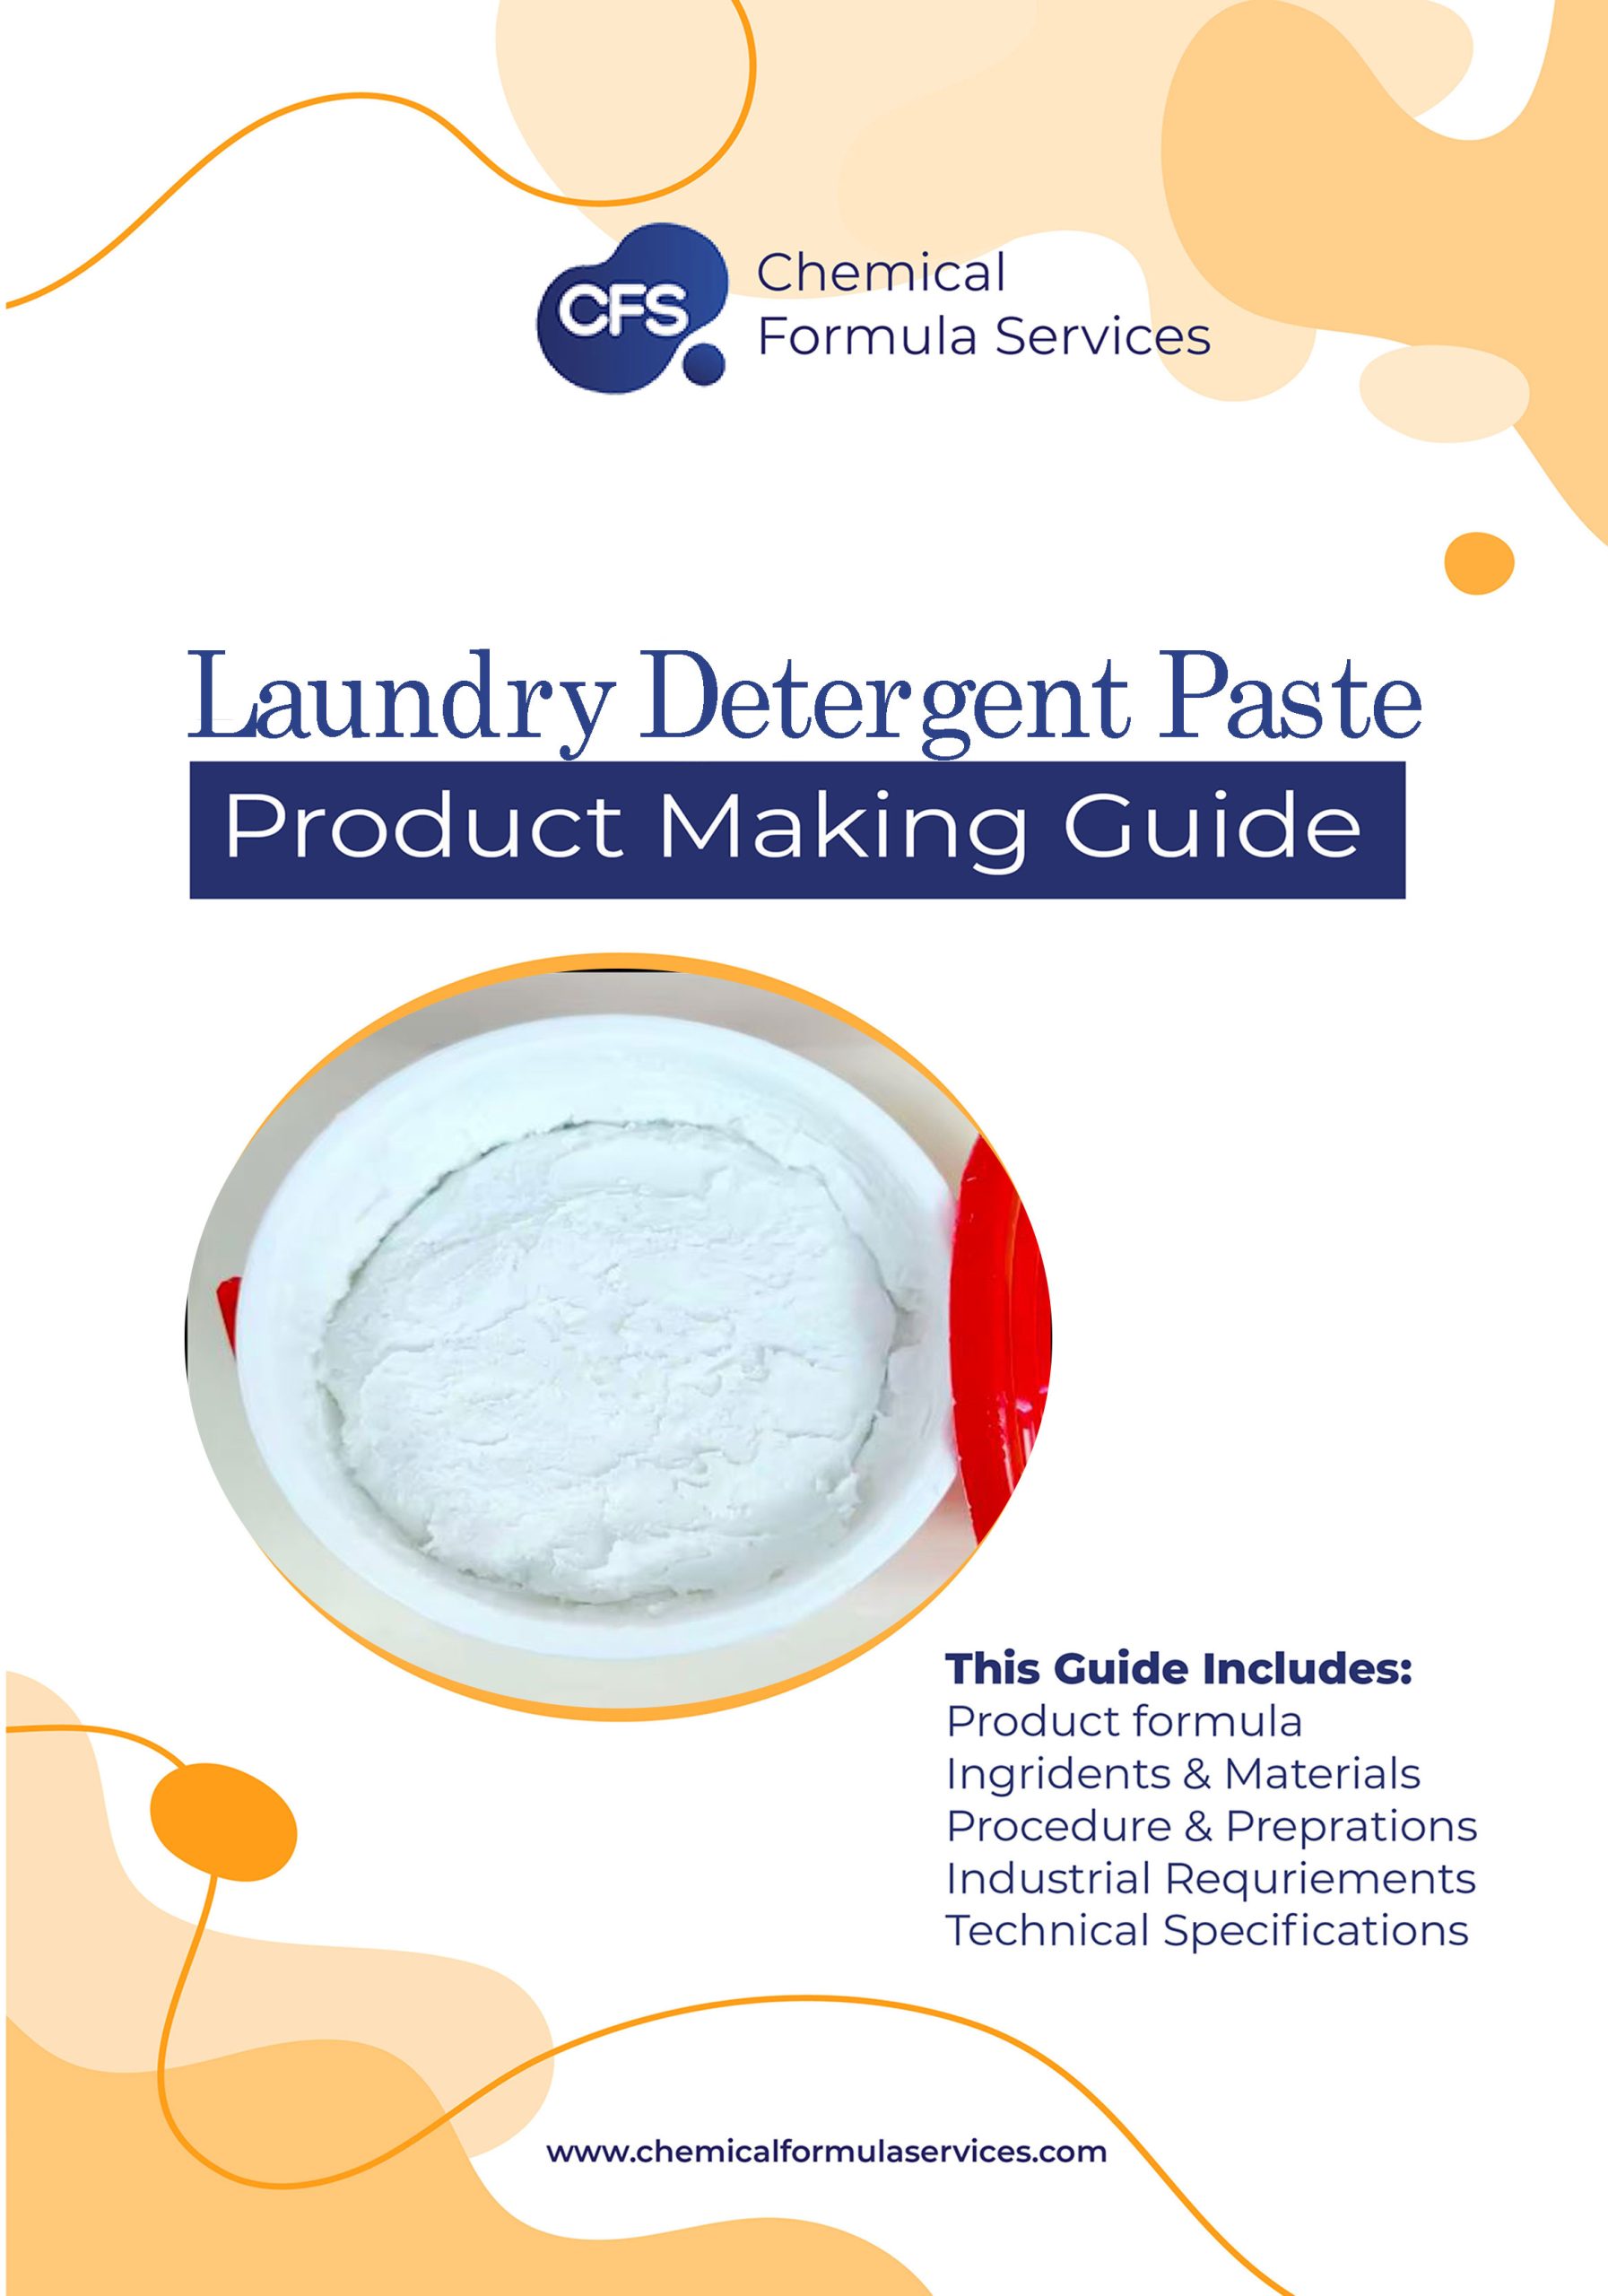 Laundry detergent paste formulation